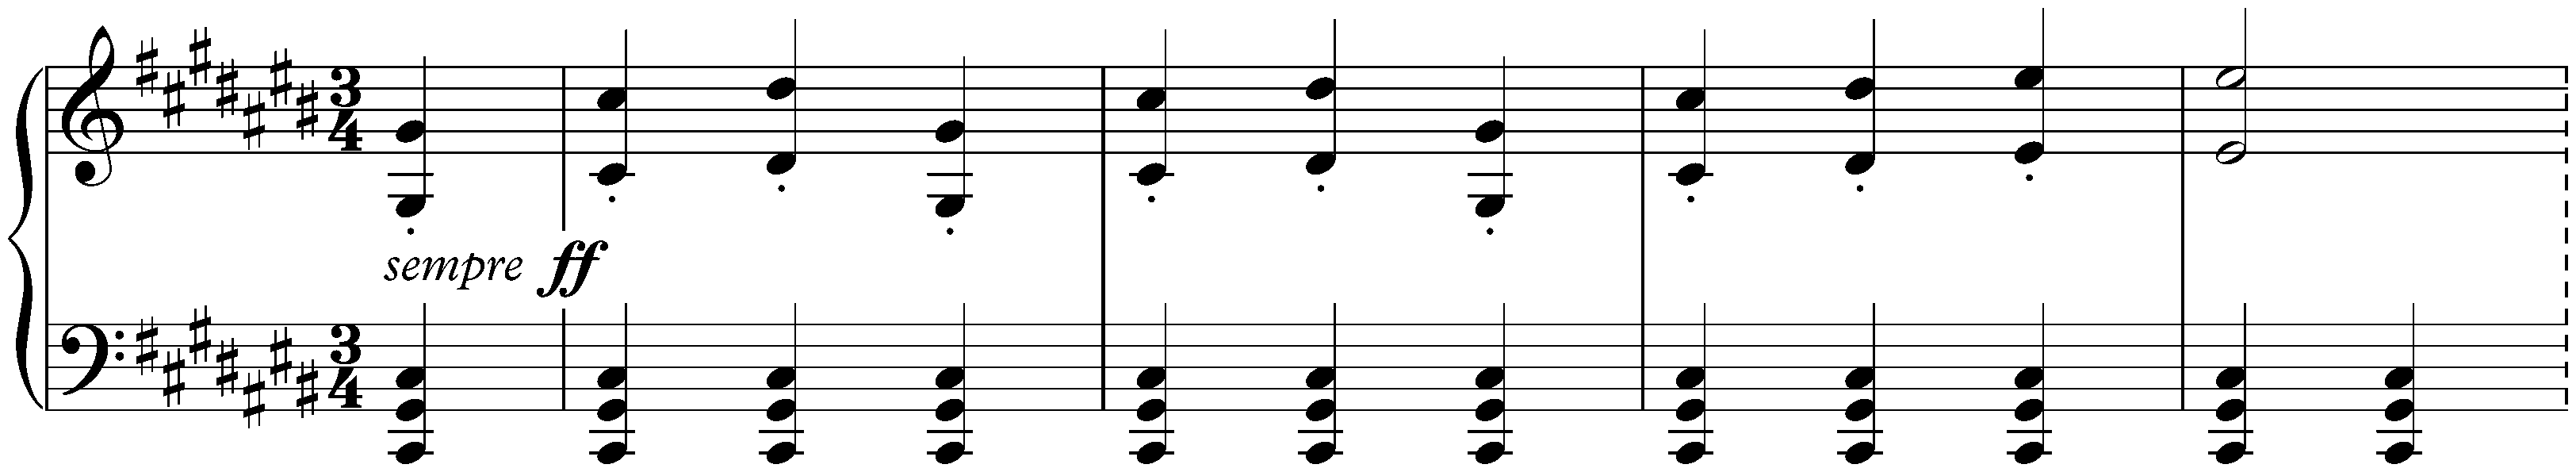 Deutscher Tanz in C-sharp major, D 139